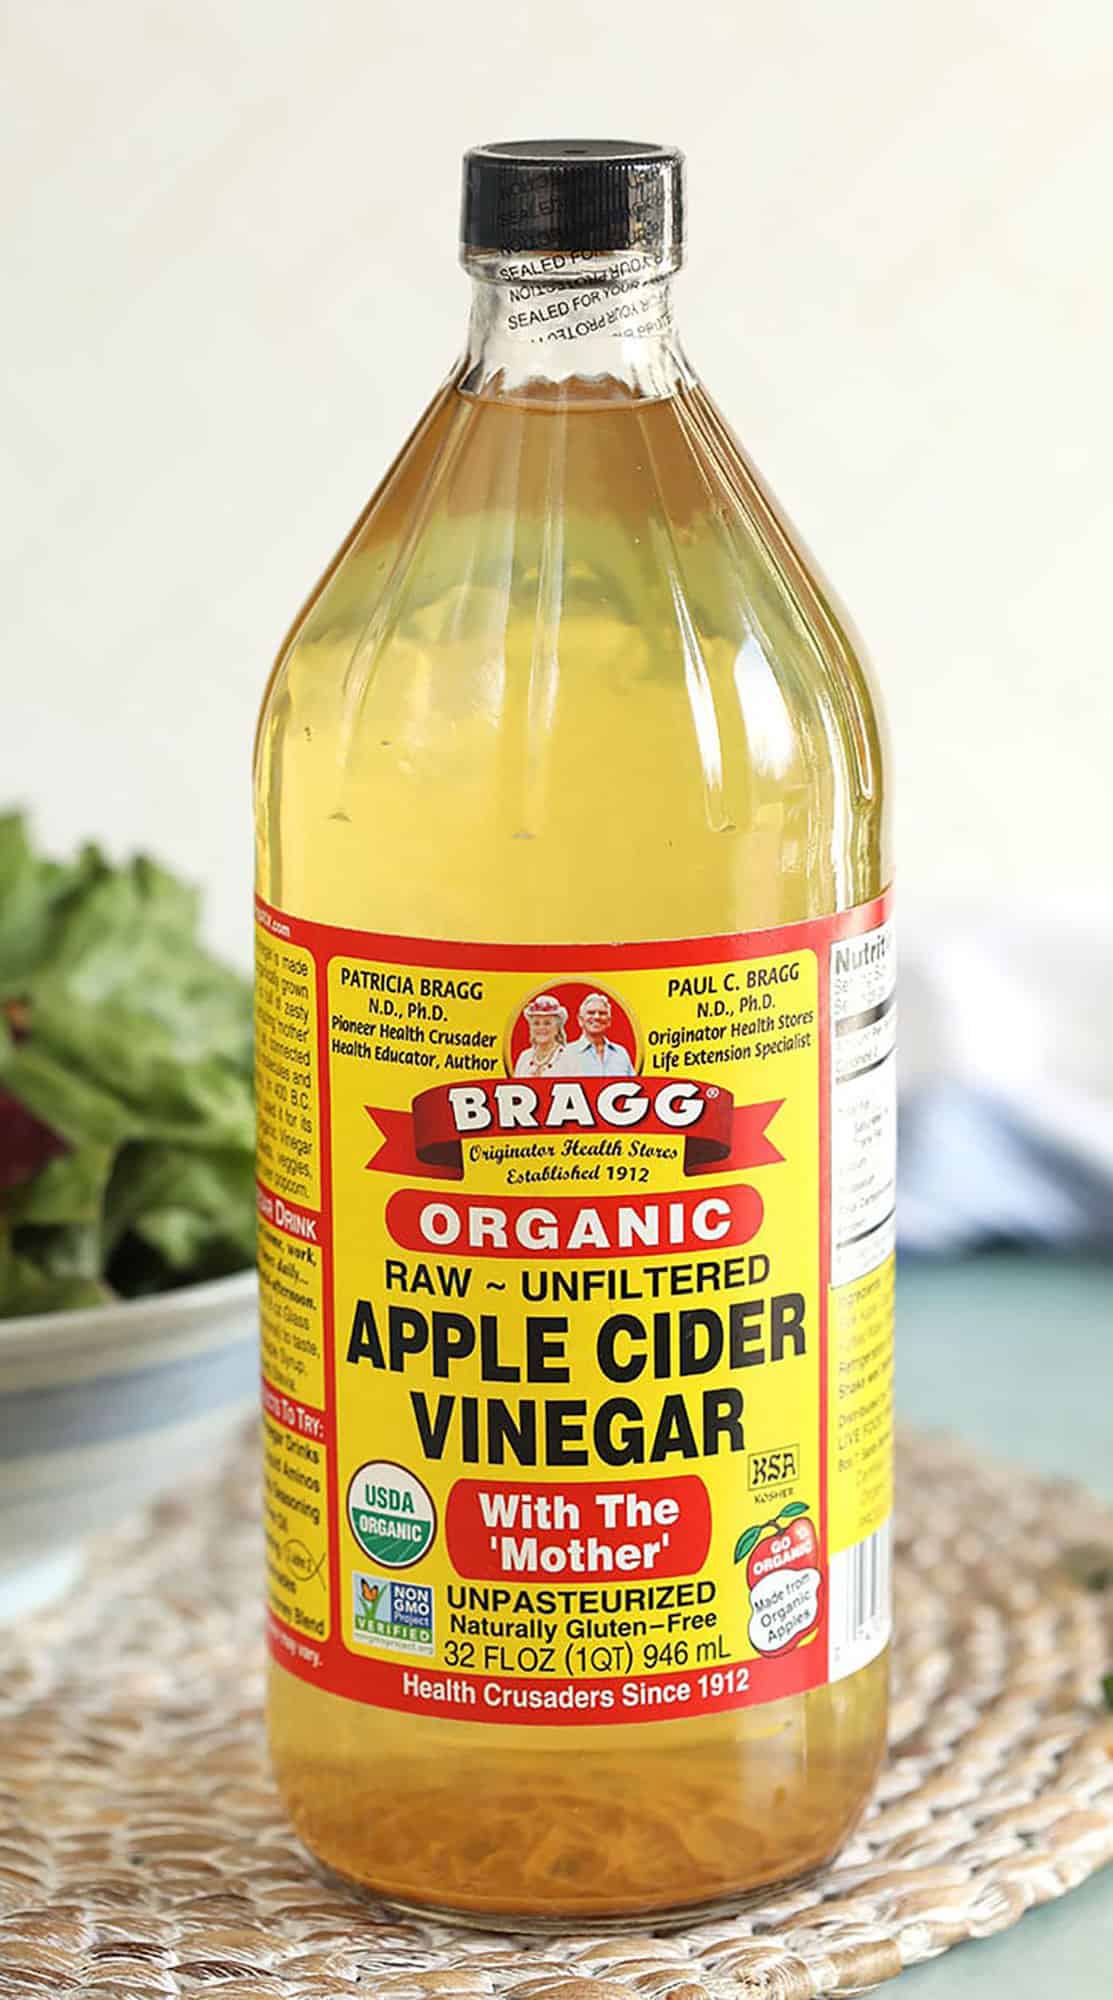 Bragg Apple Cider vinegar bottle on a wicker placemat.